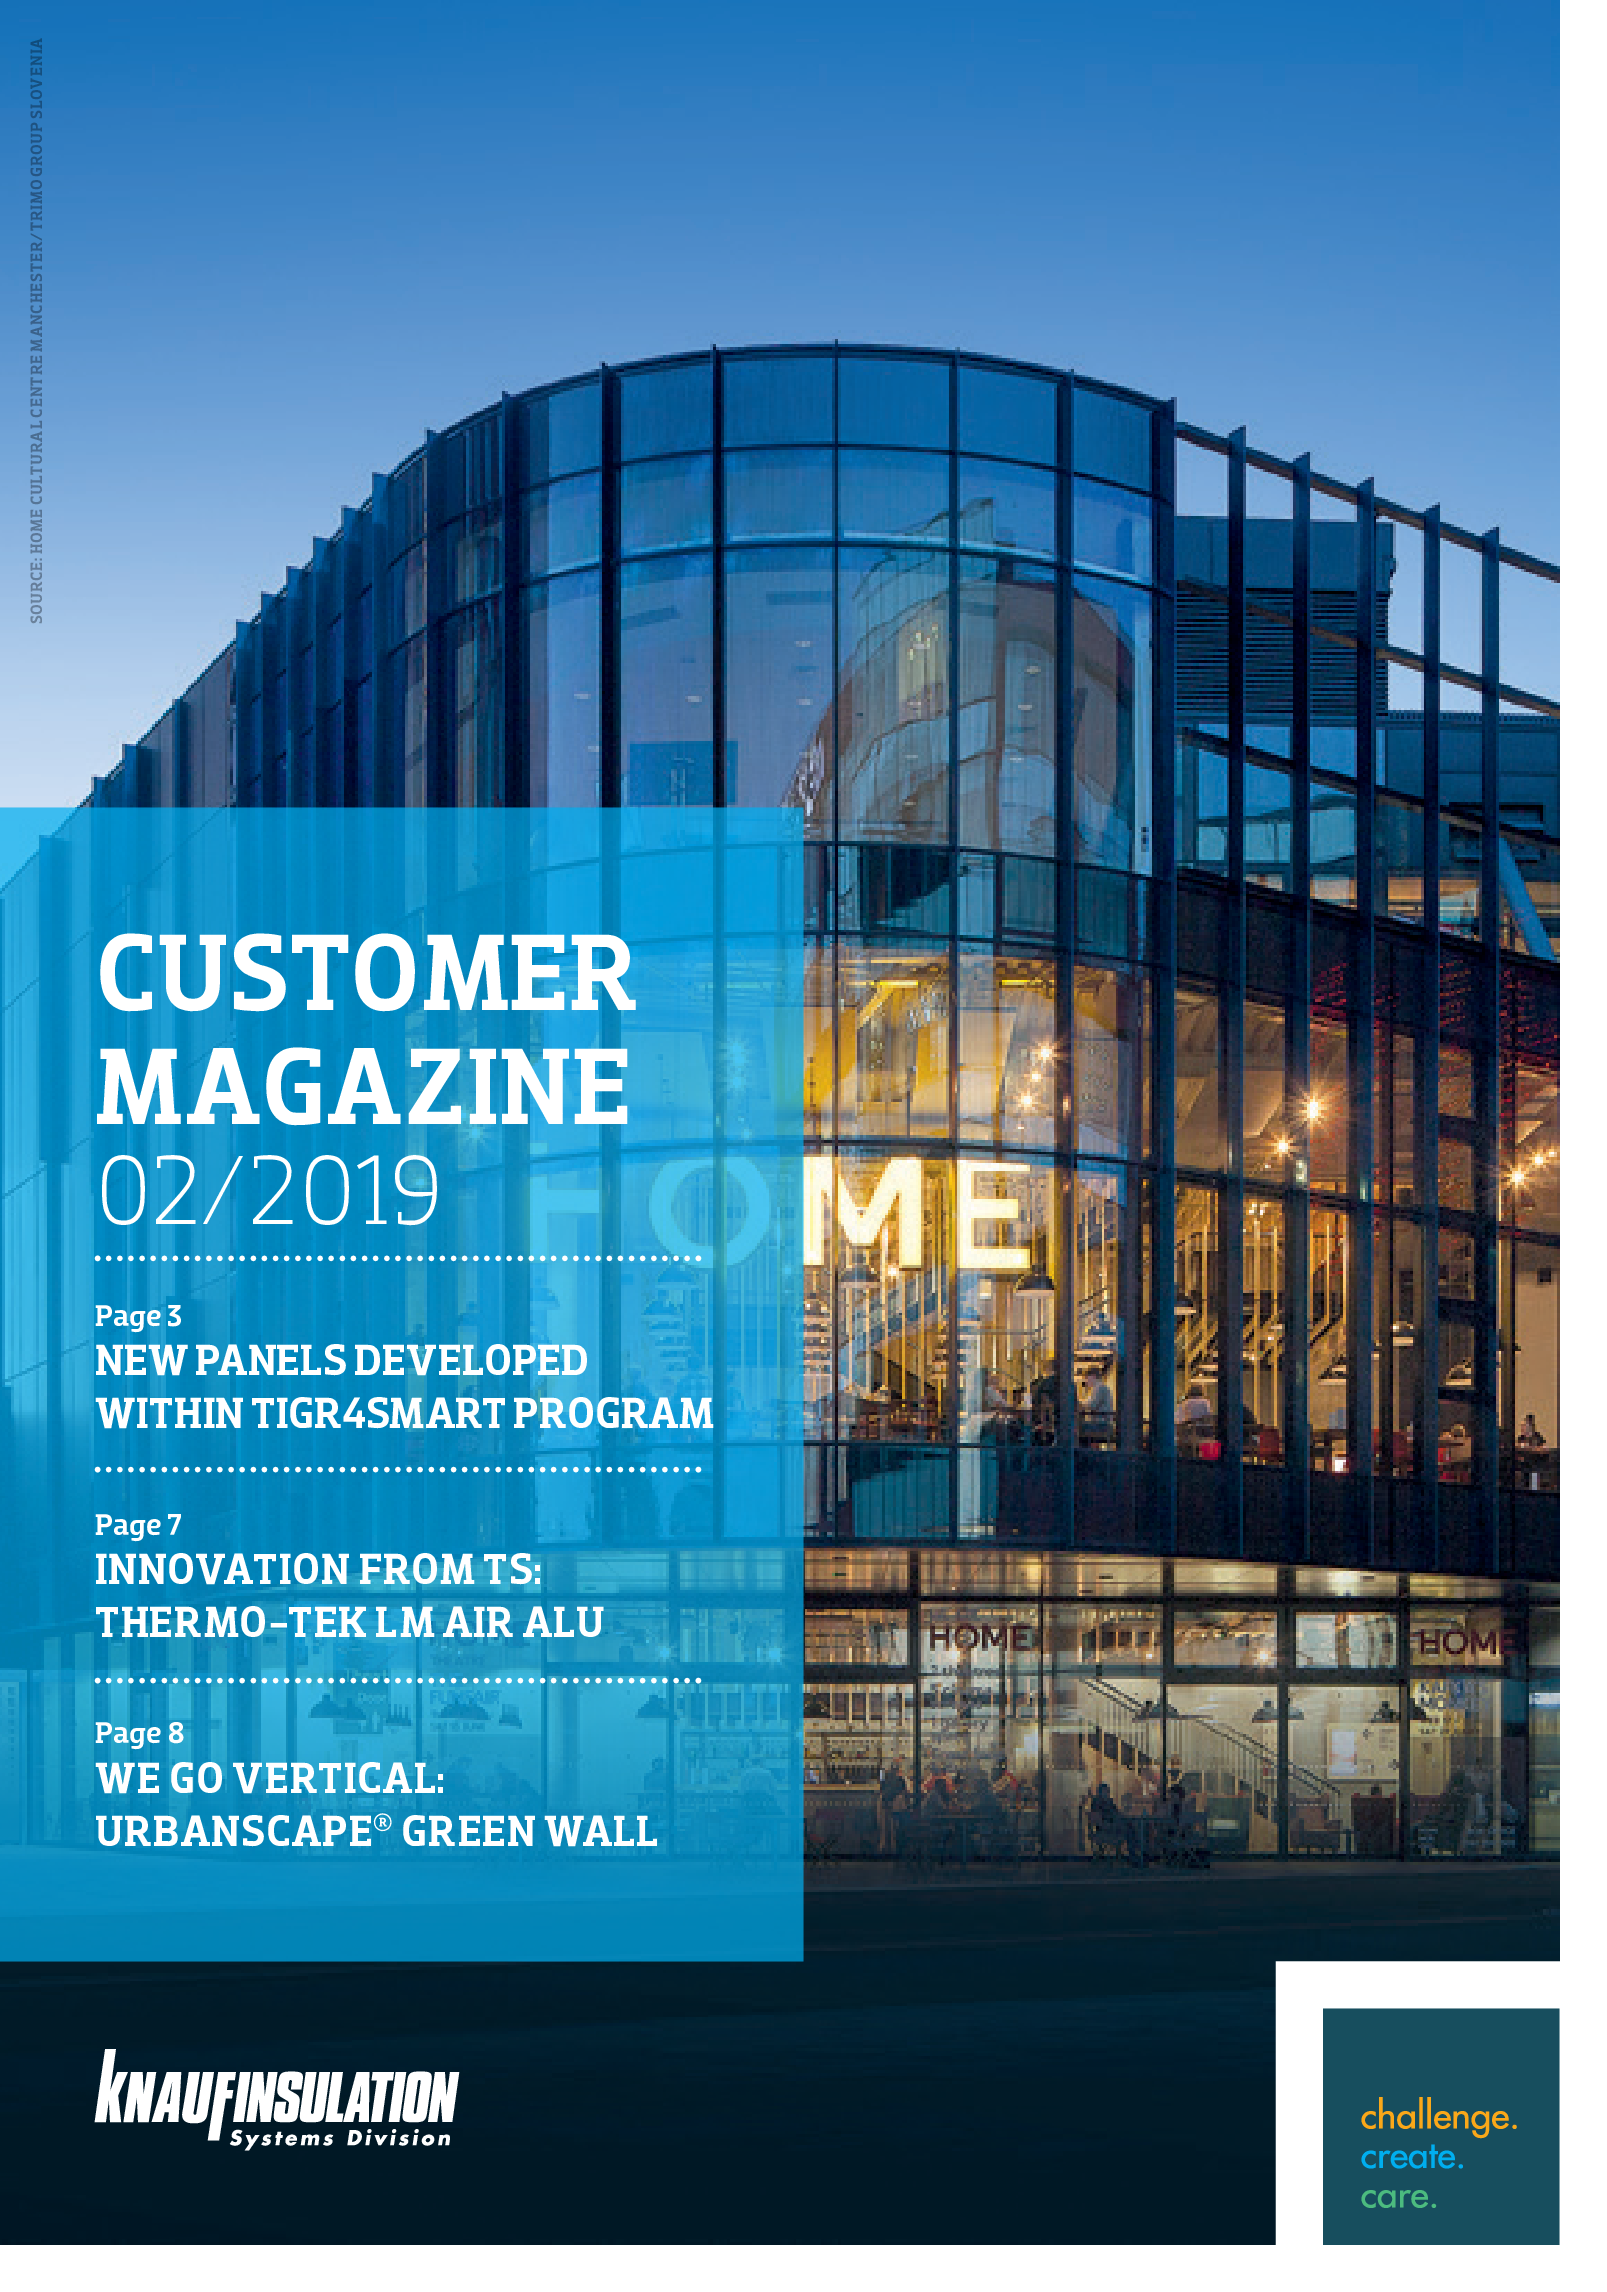 Magazine clienti_ Knauf Insulation Systems Divison_02/2019_inglese